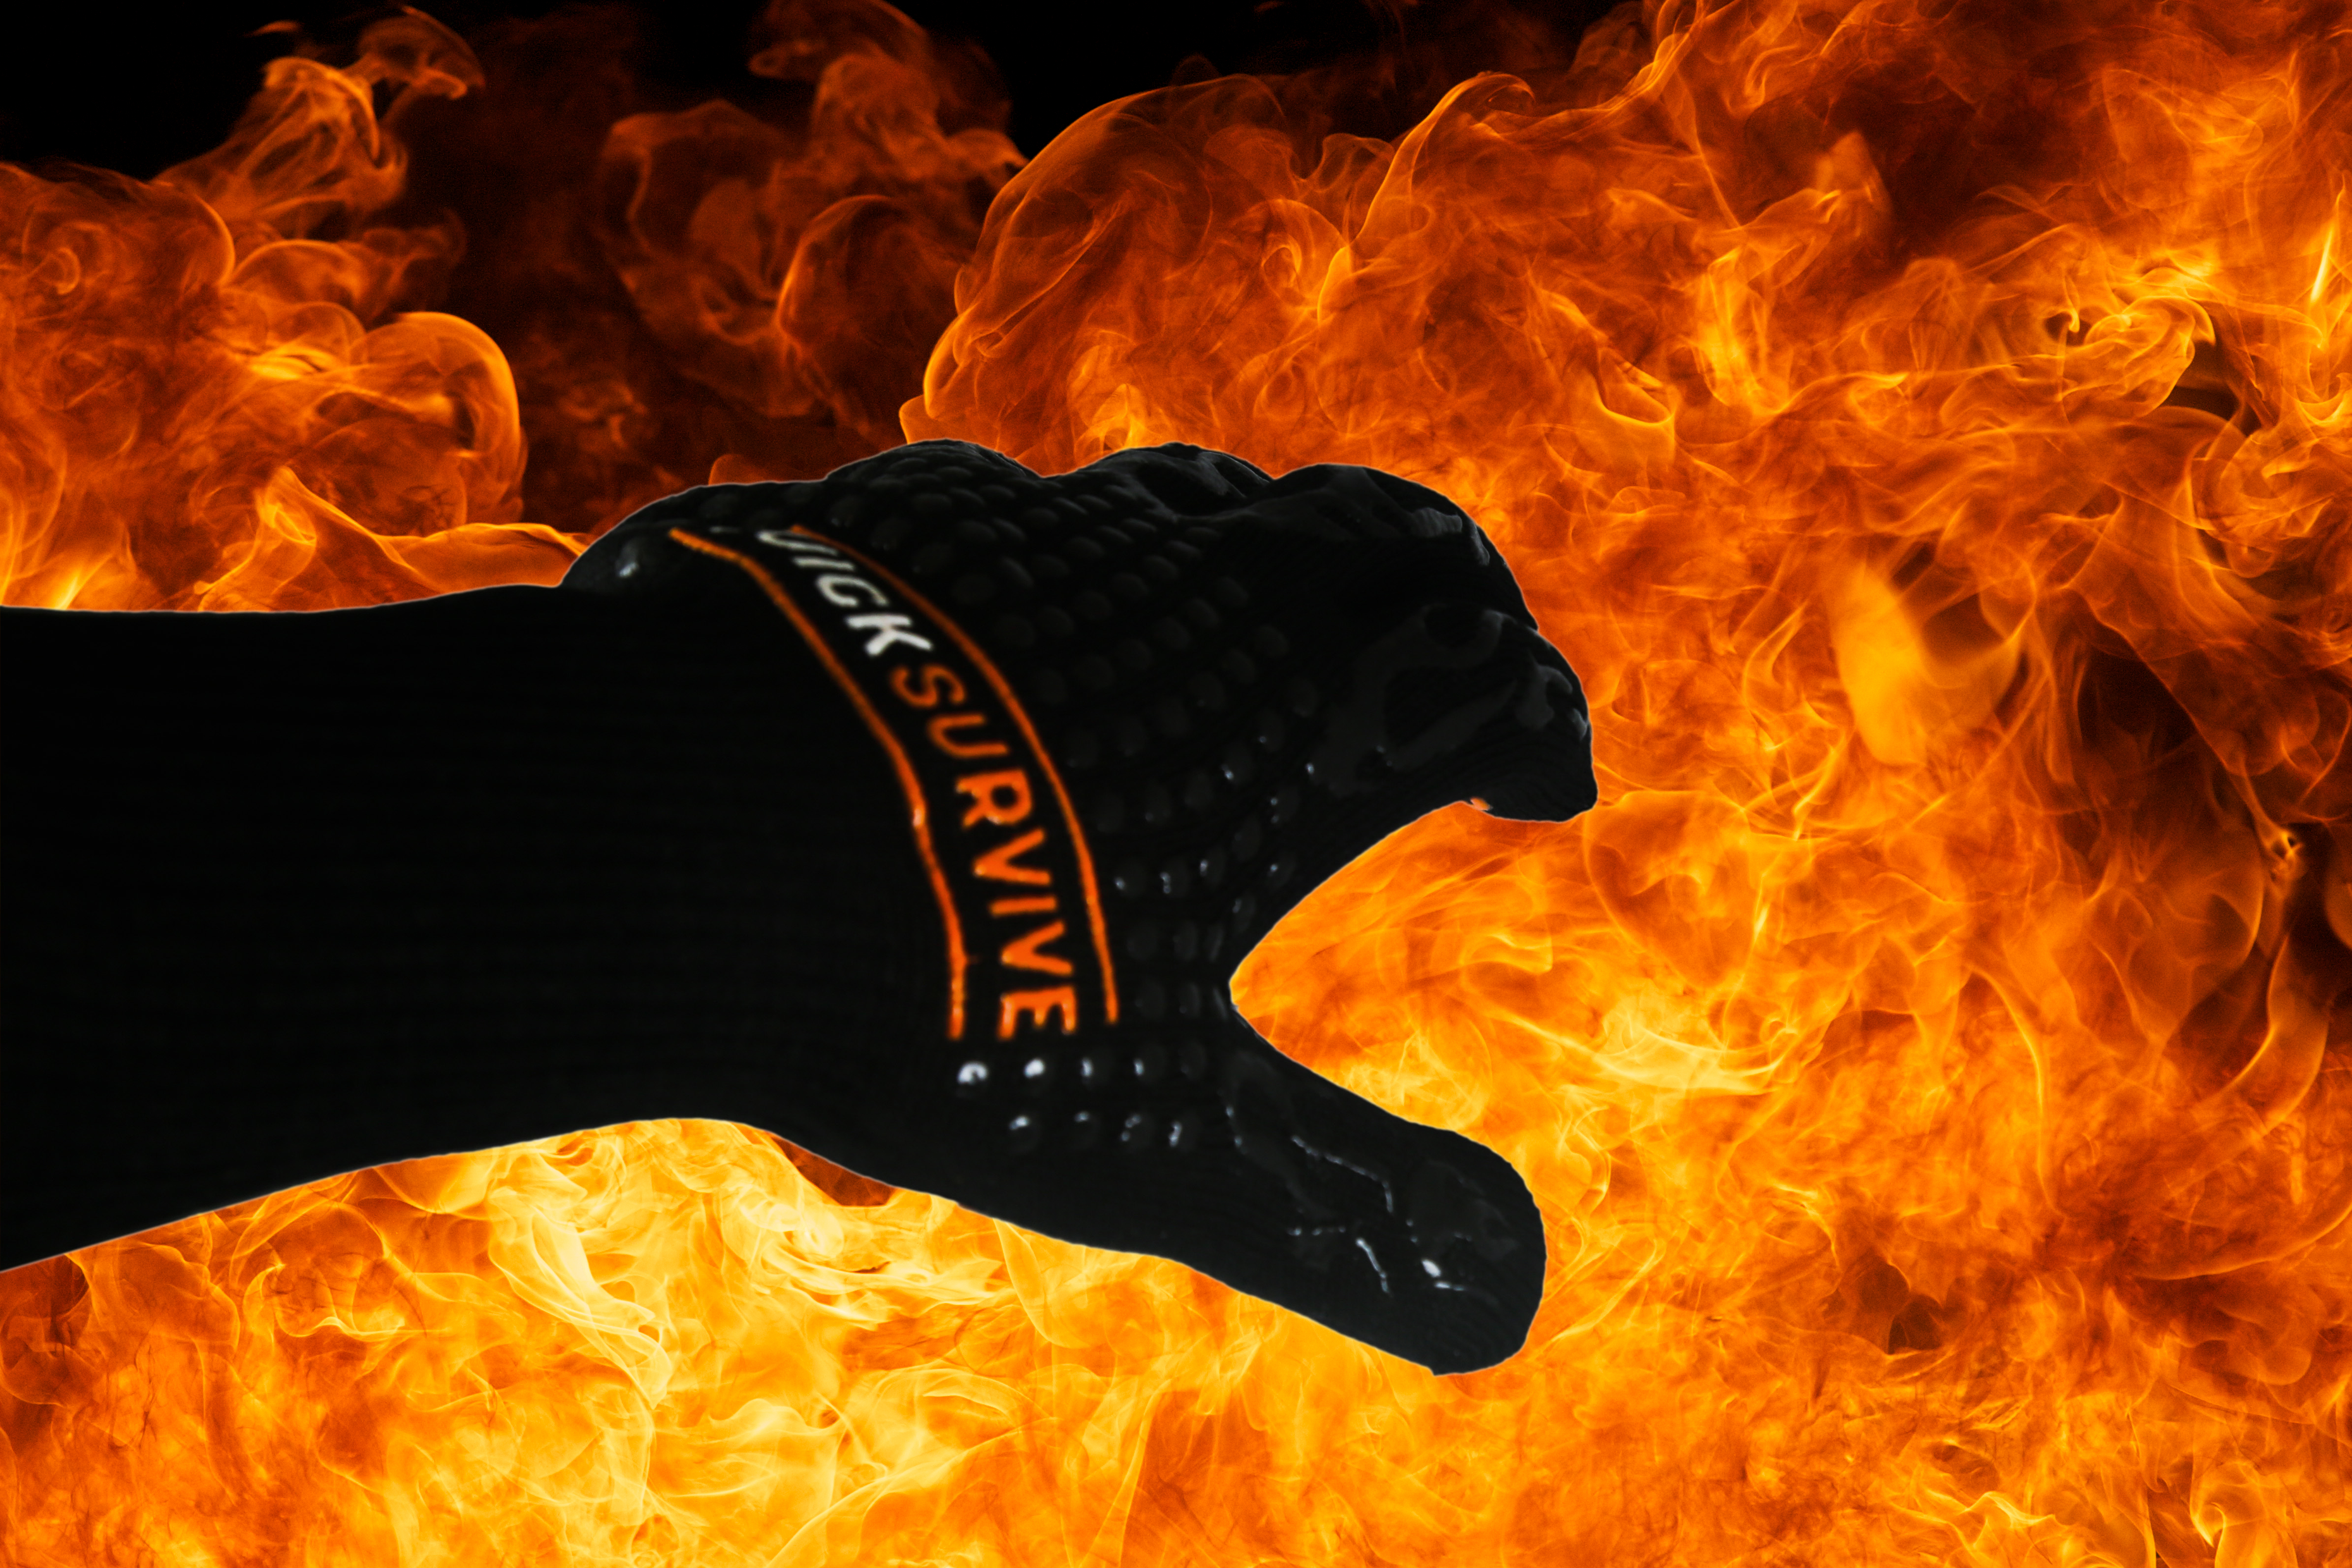 Quick Survive Heat Resistant Fire Safety Glove